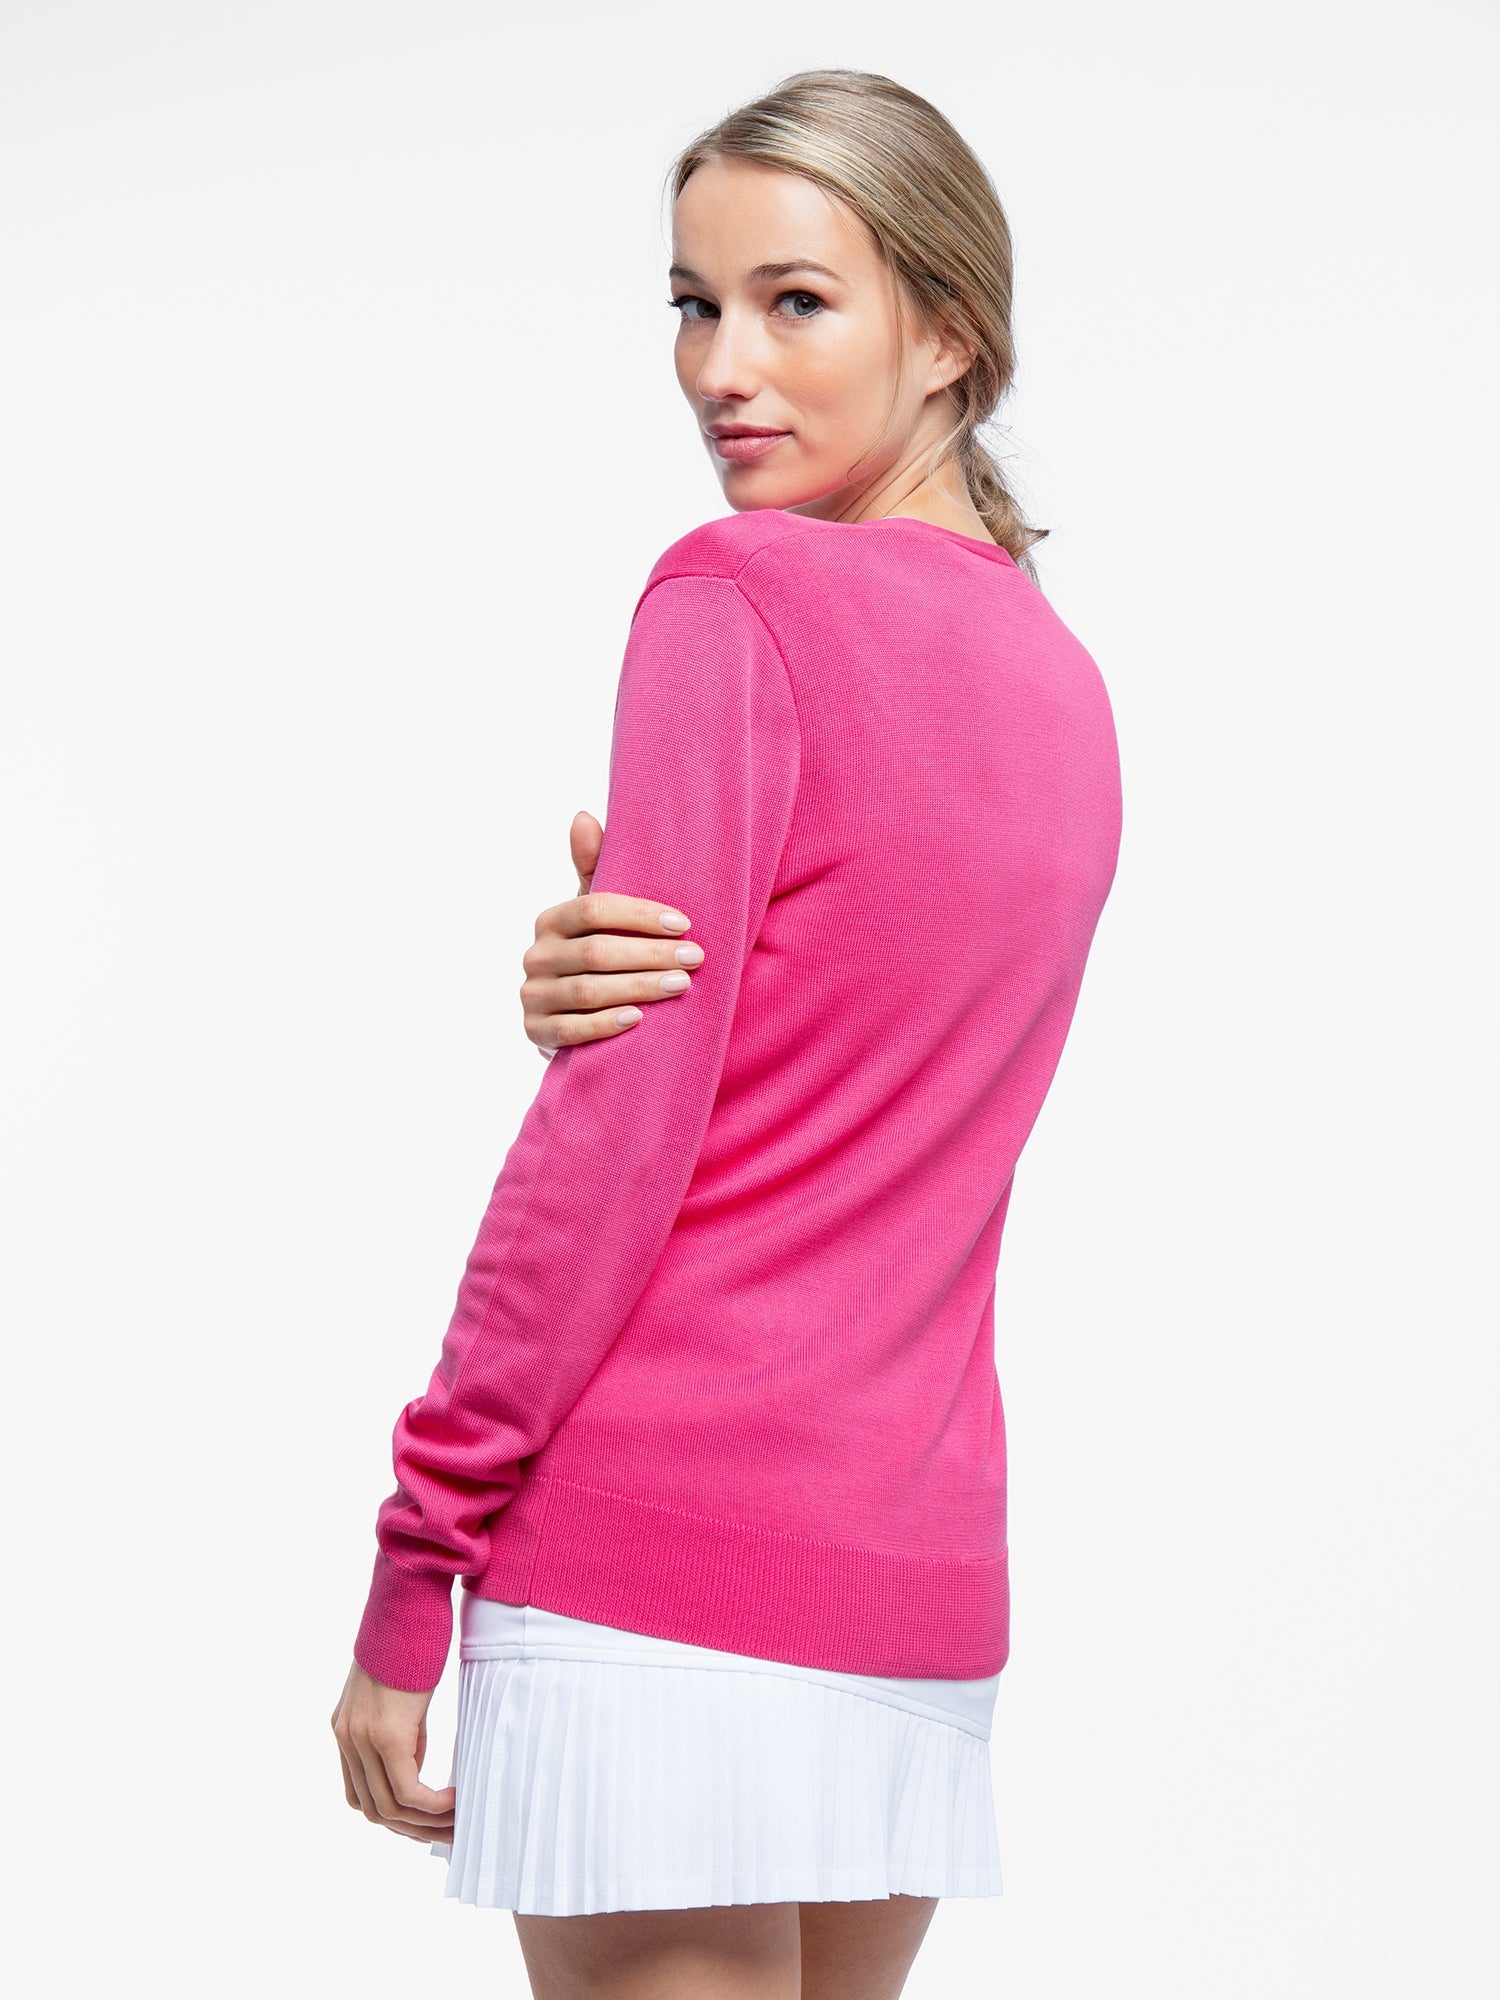 Classic V Neck Cardigan Sweater - Pink Rose